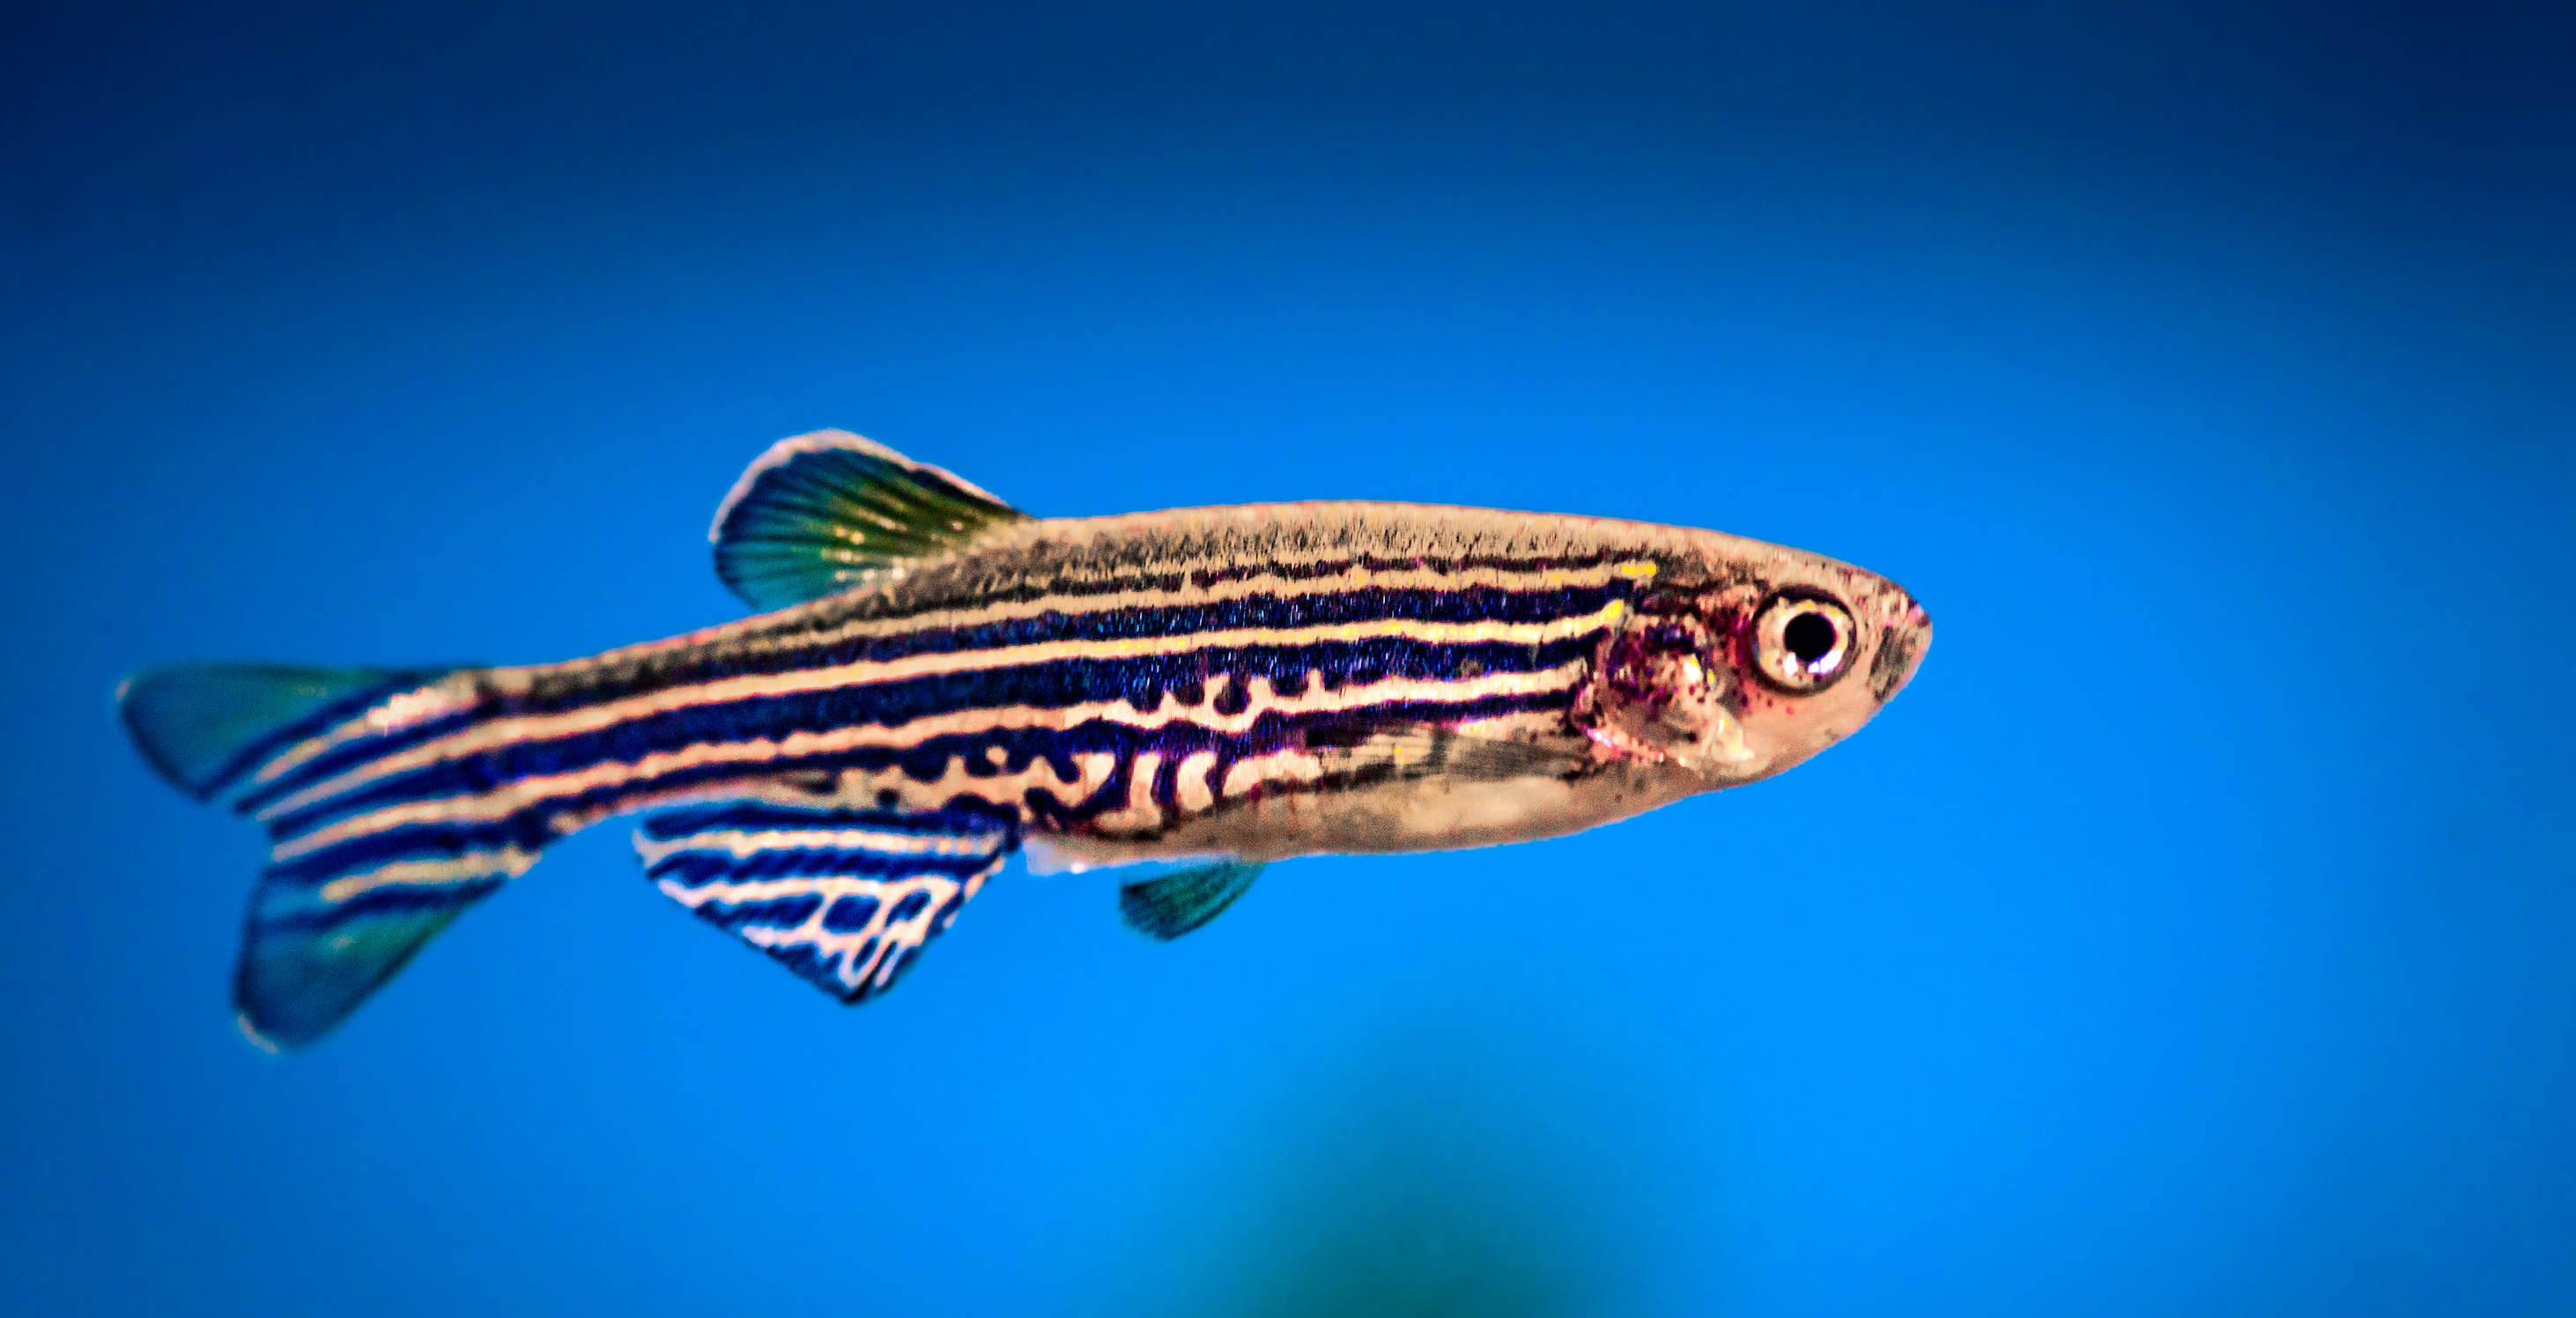 Study IDs signaling cascade behind retina regeneration in zebrafish